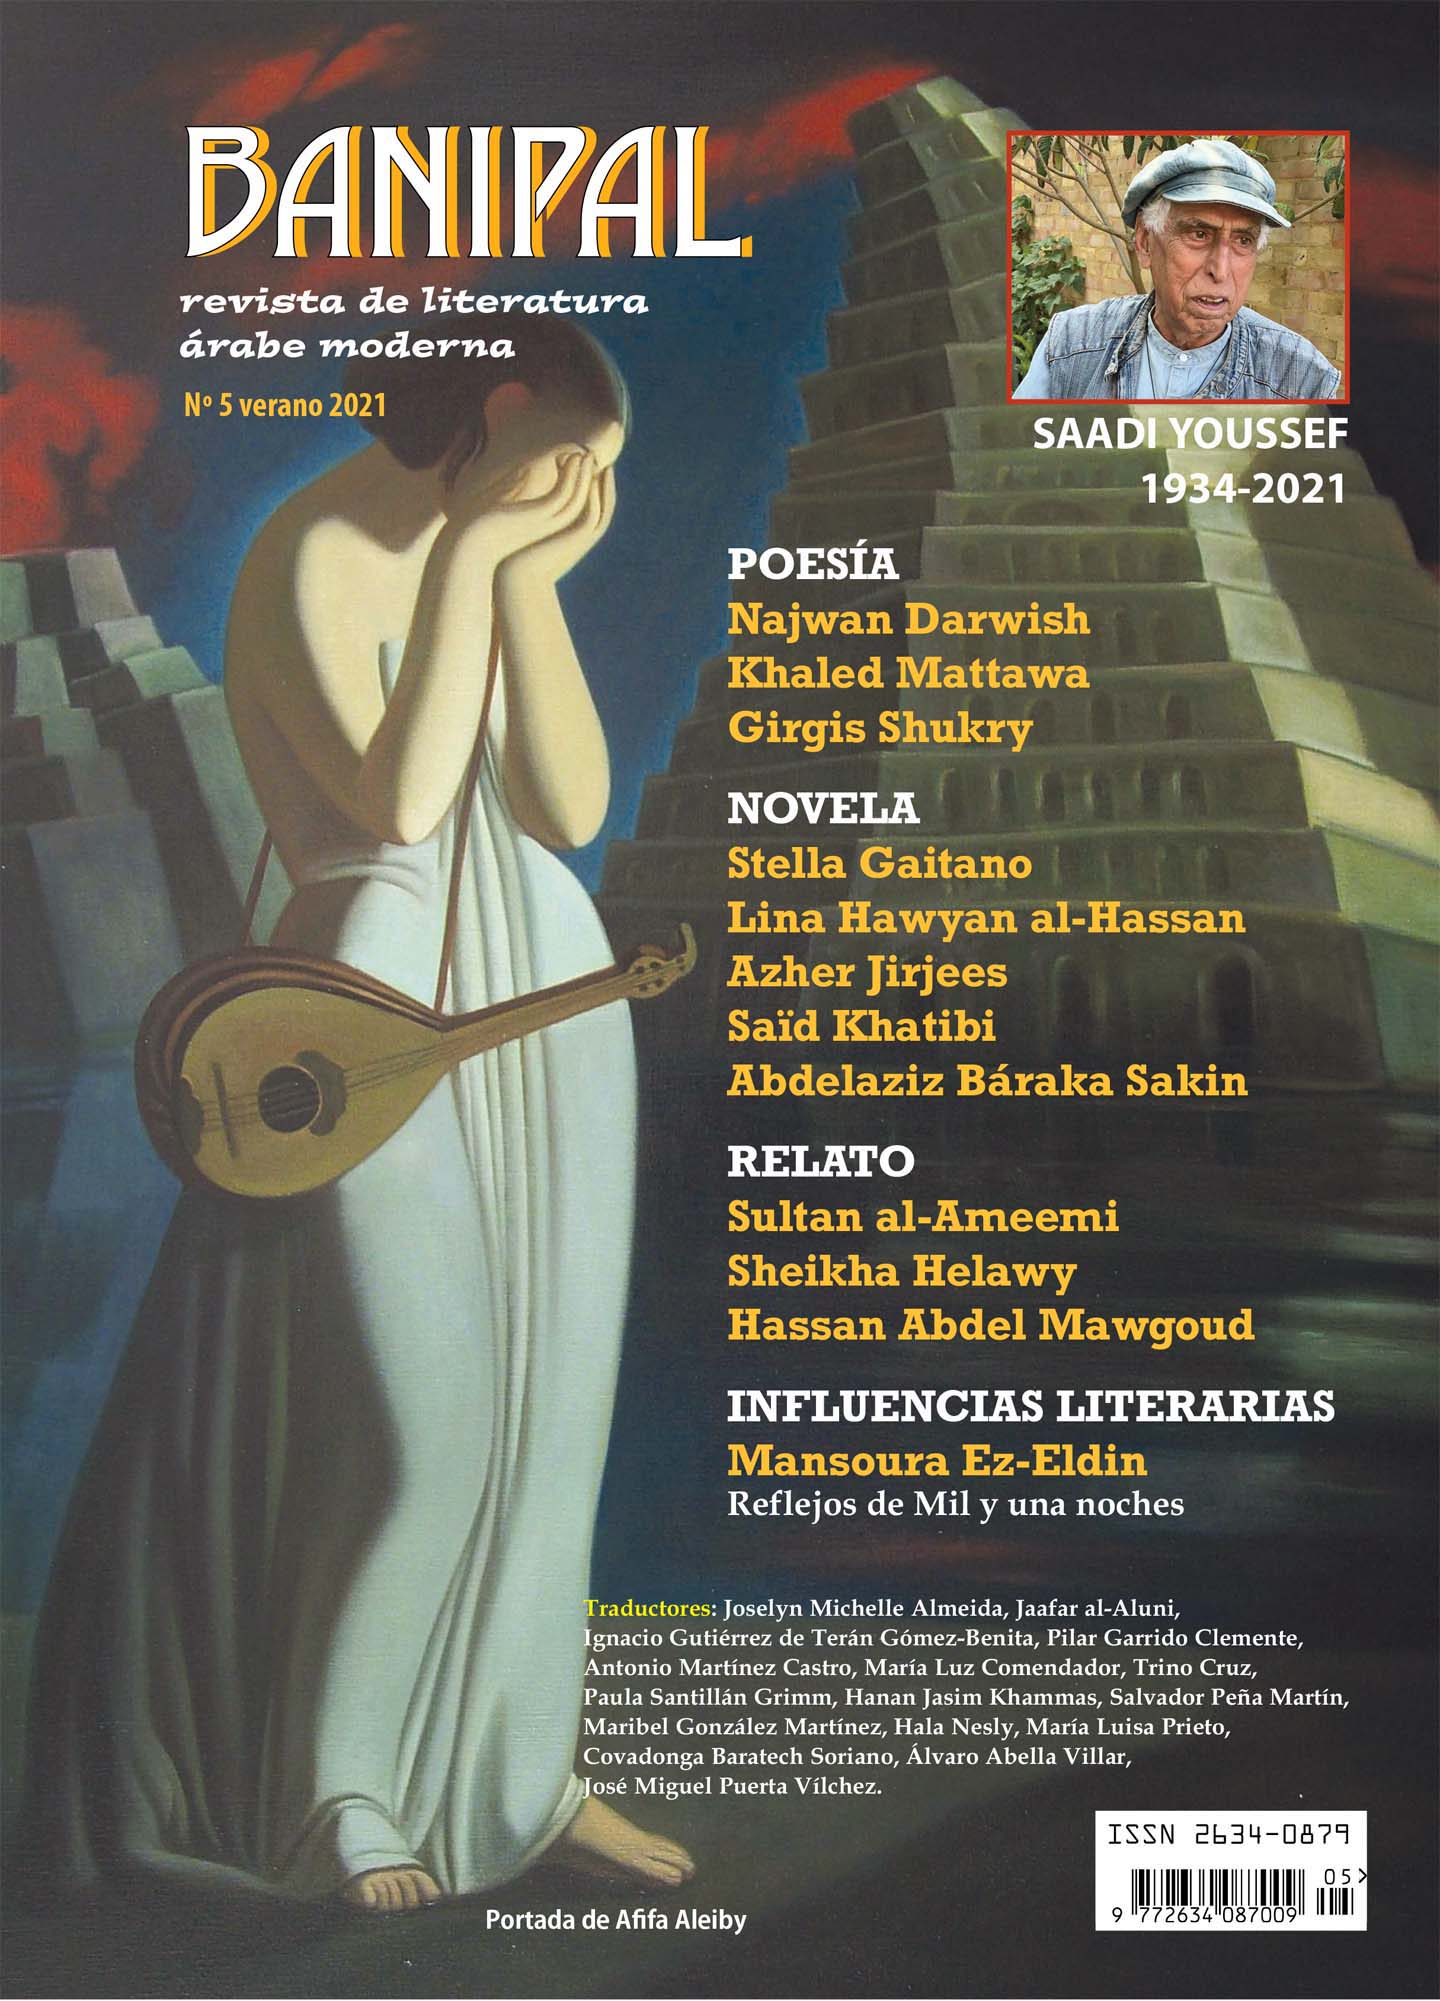 Front cover Revista Banipal No5